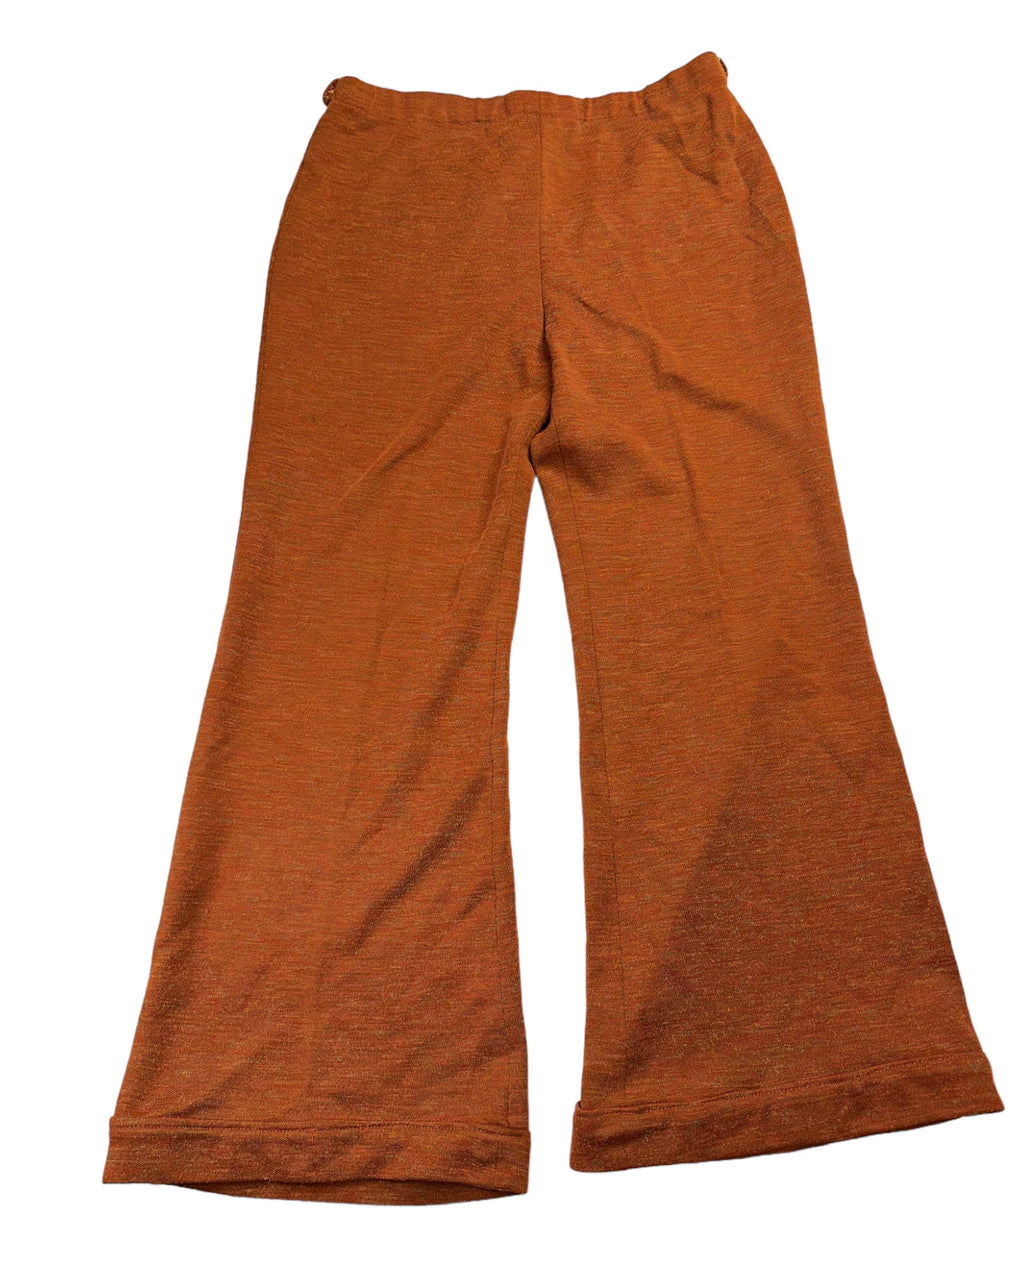 Orange 60s/70s Cotton Flares, L